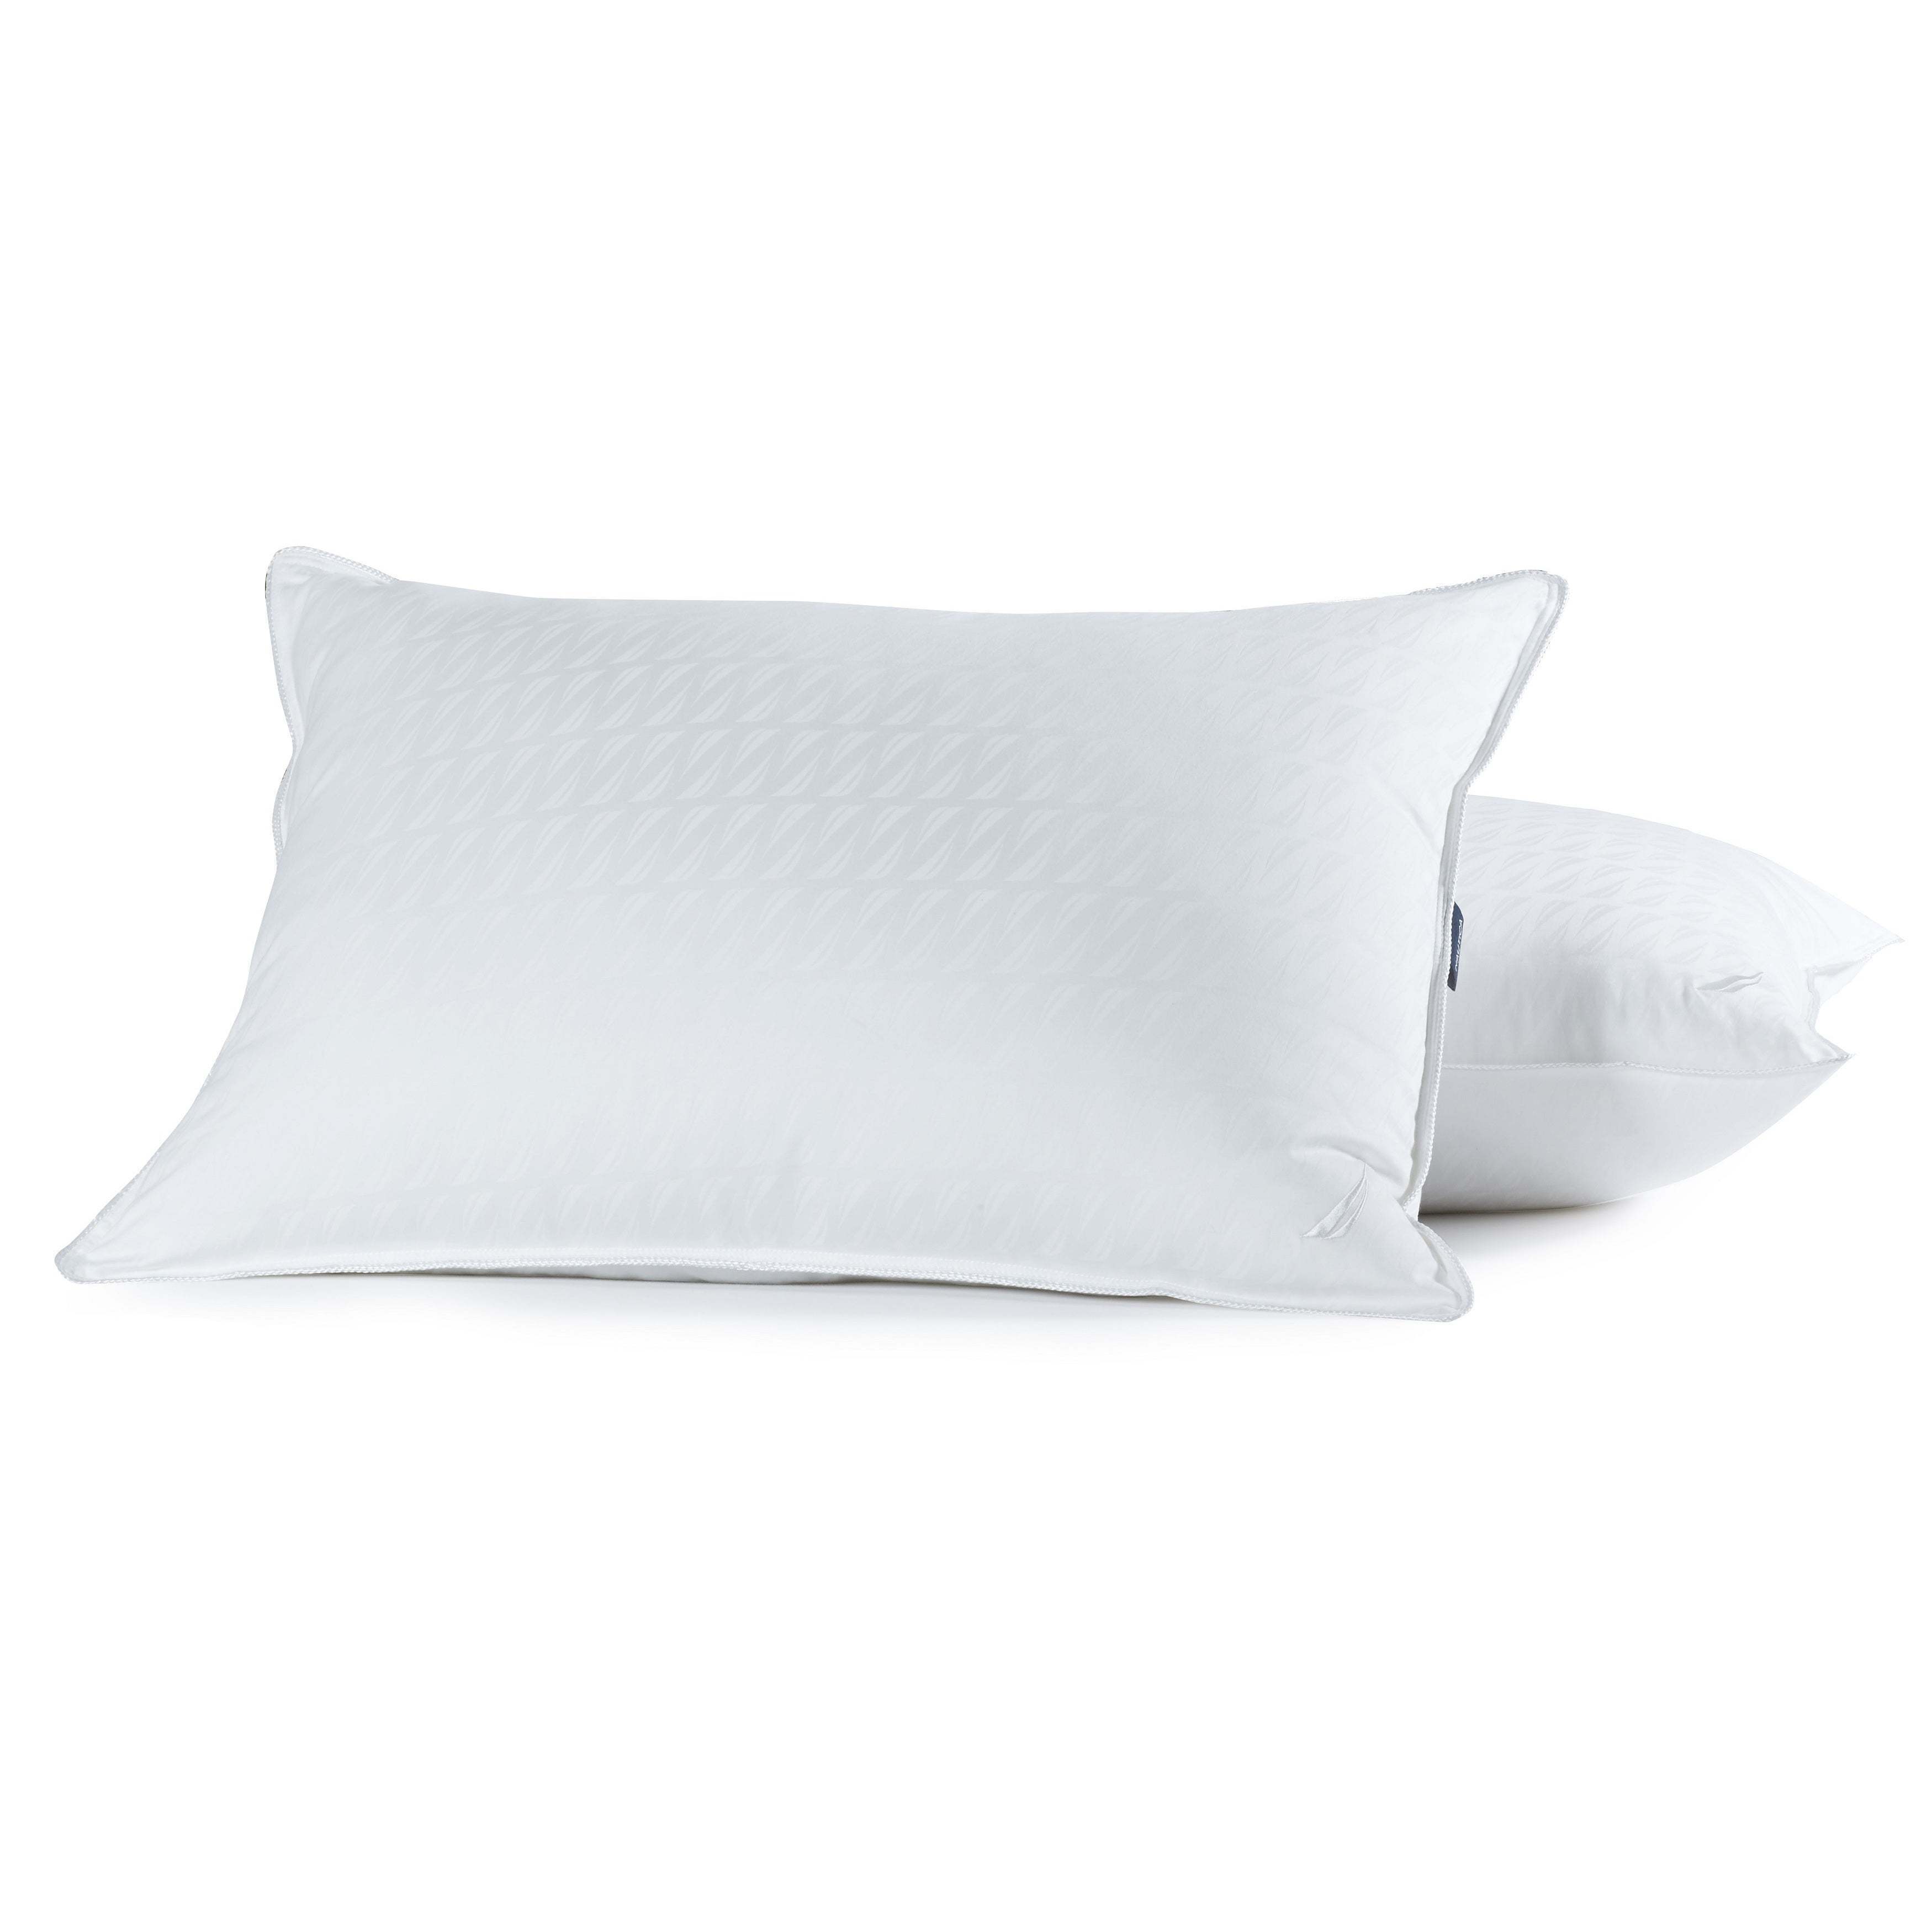 nautica travel pillow